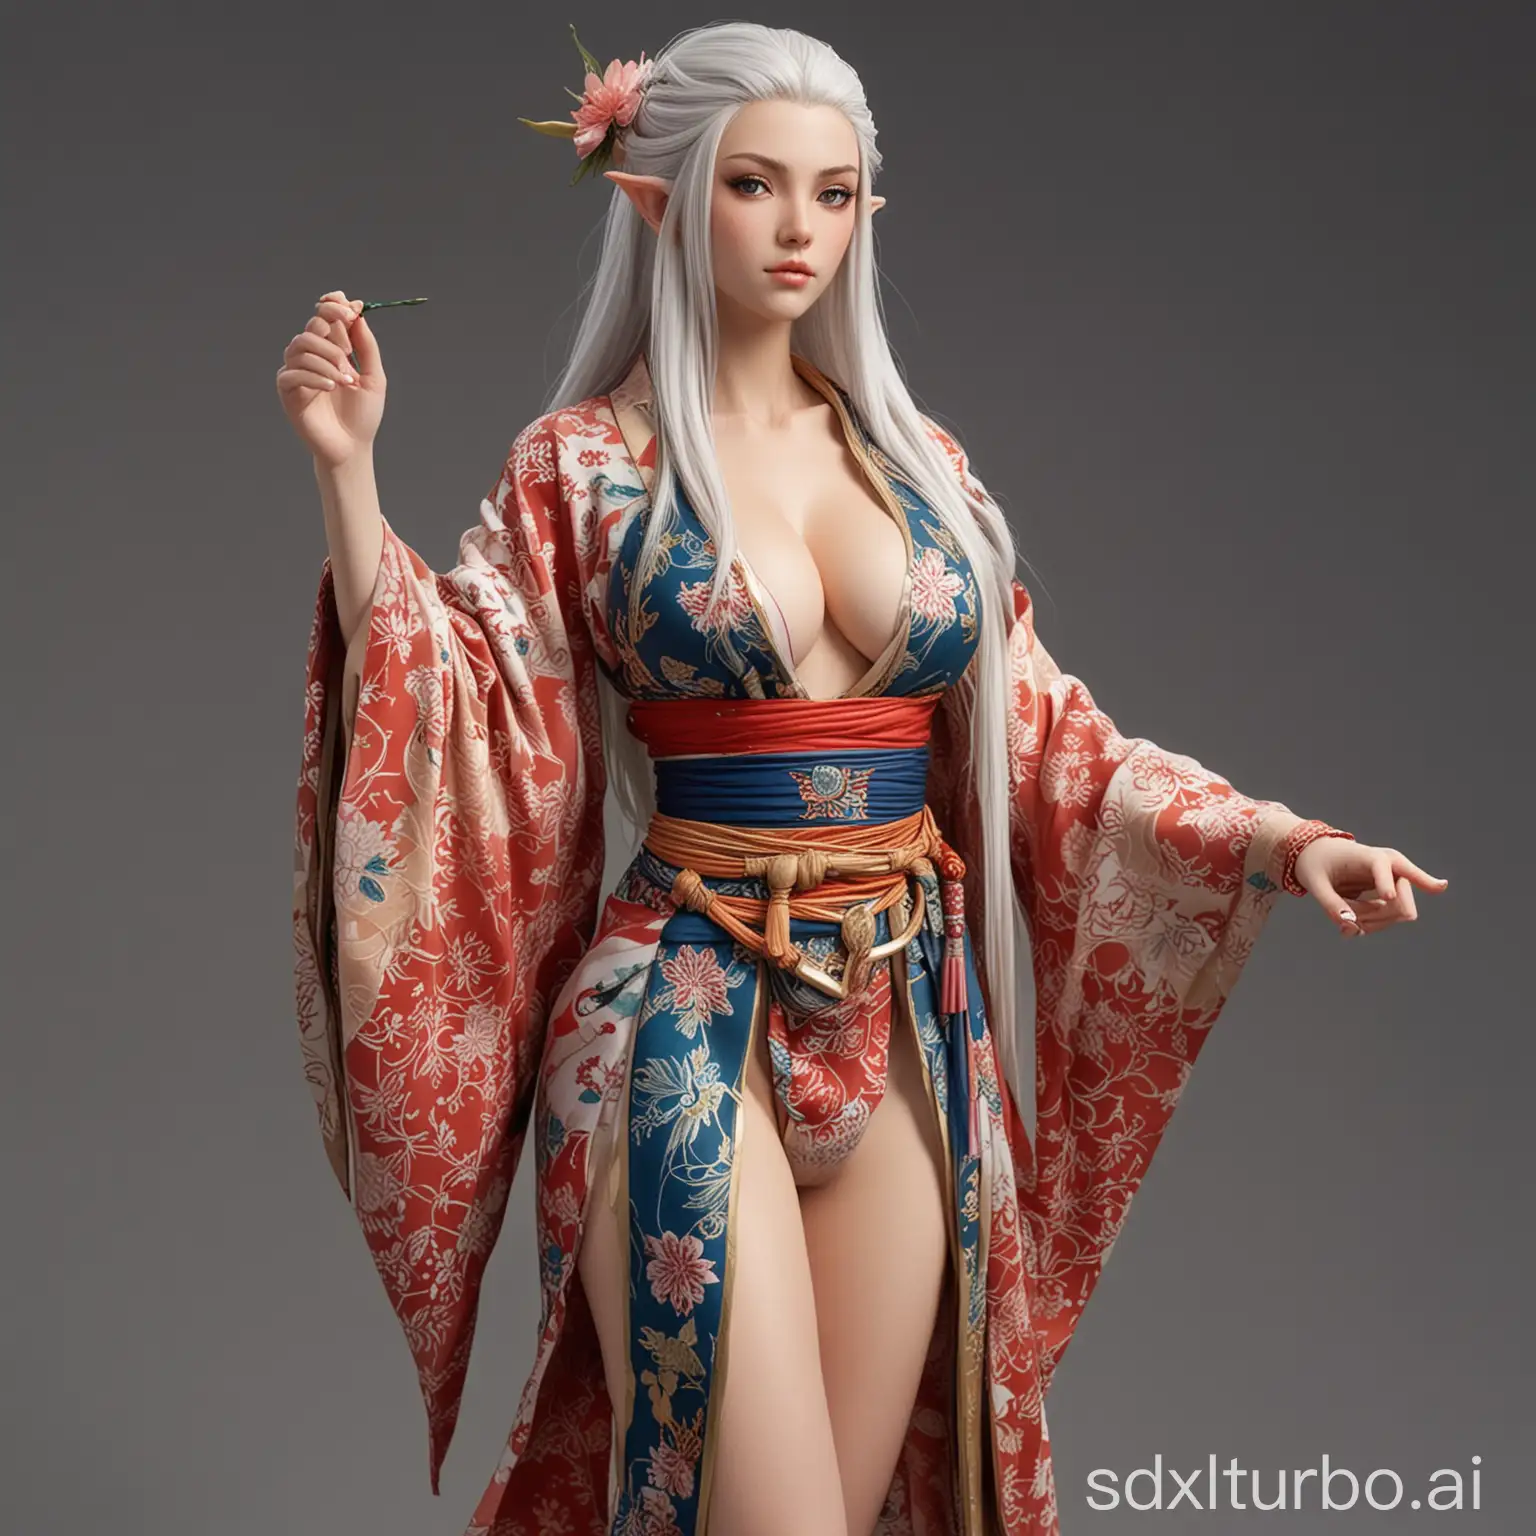 Elegant-High-Elf-Woman-in-Revealing-Kimono-Fantasy-Character-Art